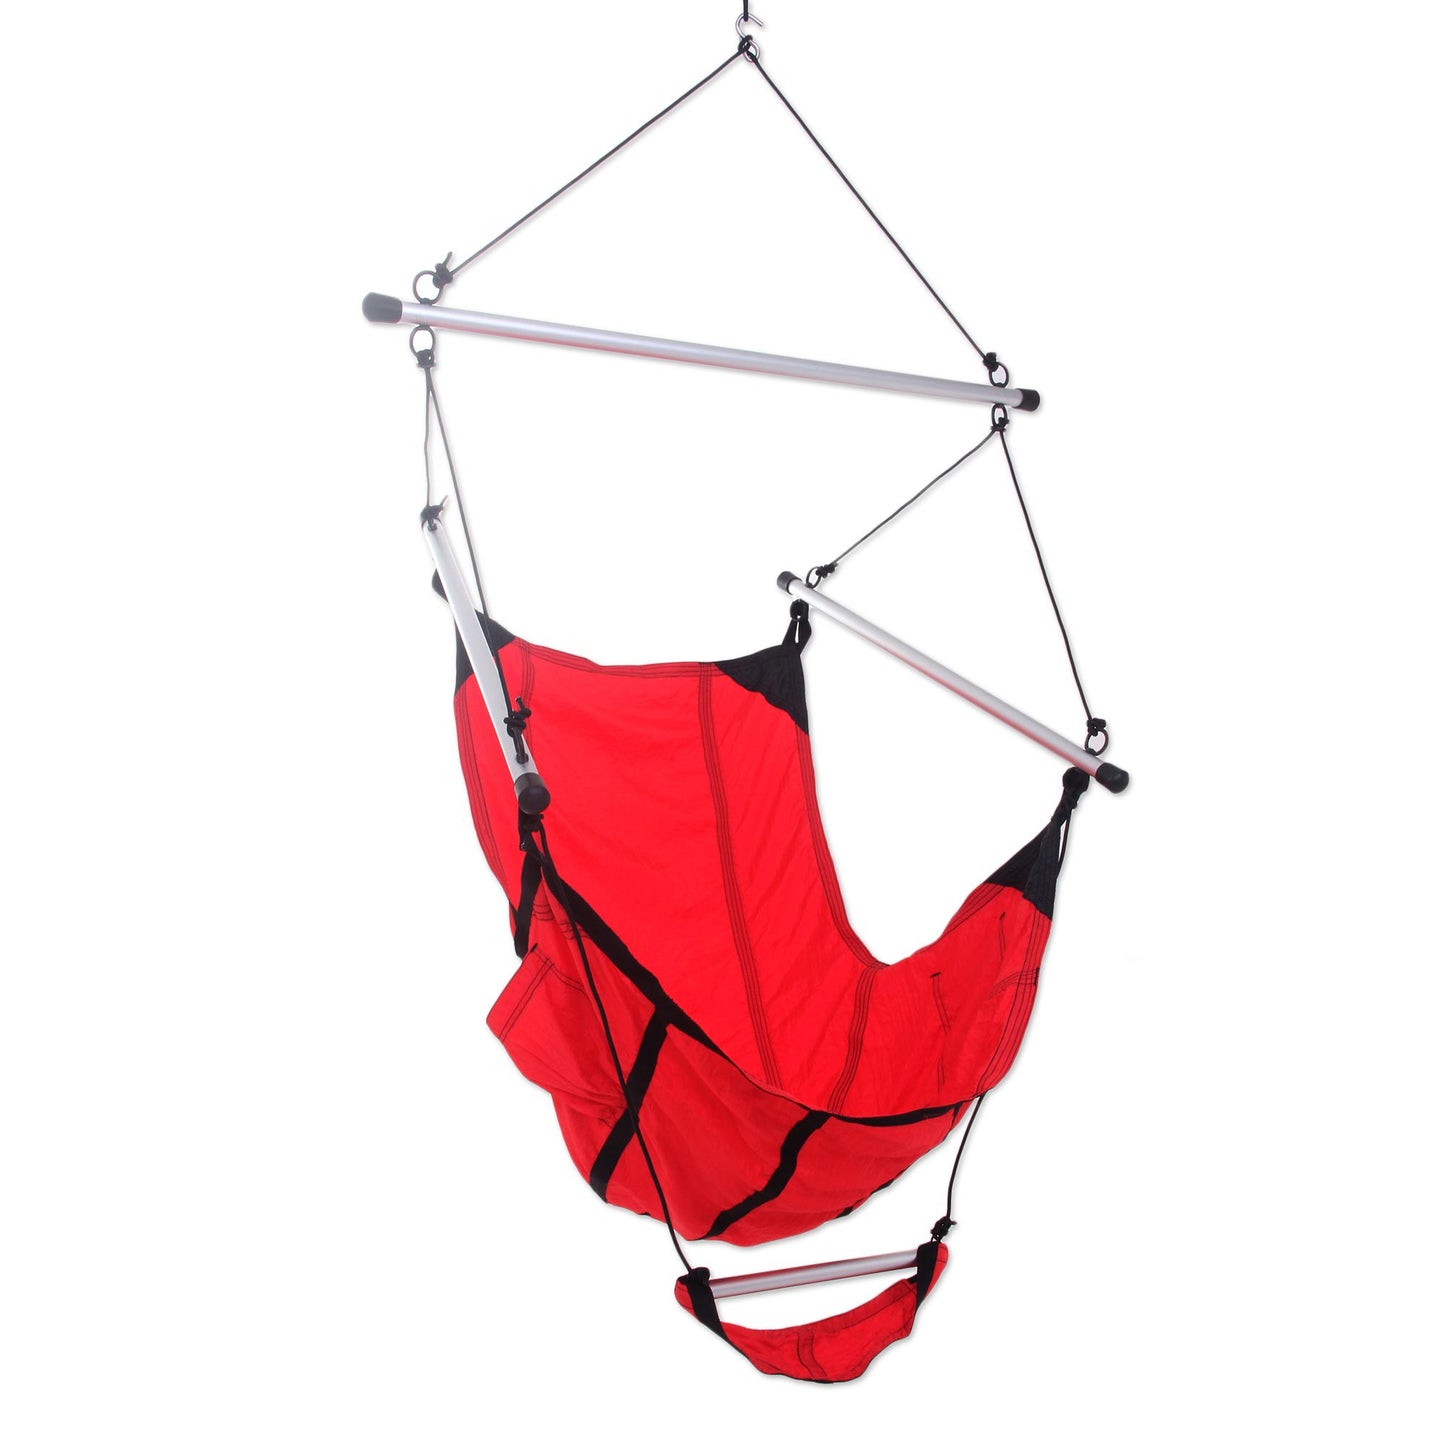 Nusa Dua Red Red Parachute Hammock Swing Portable Hanging Chair